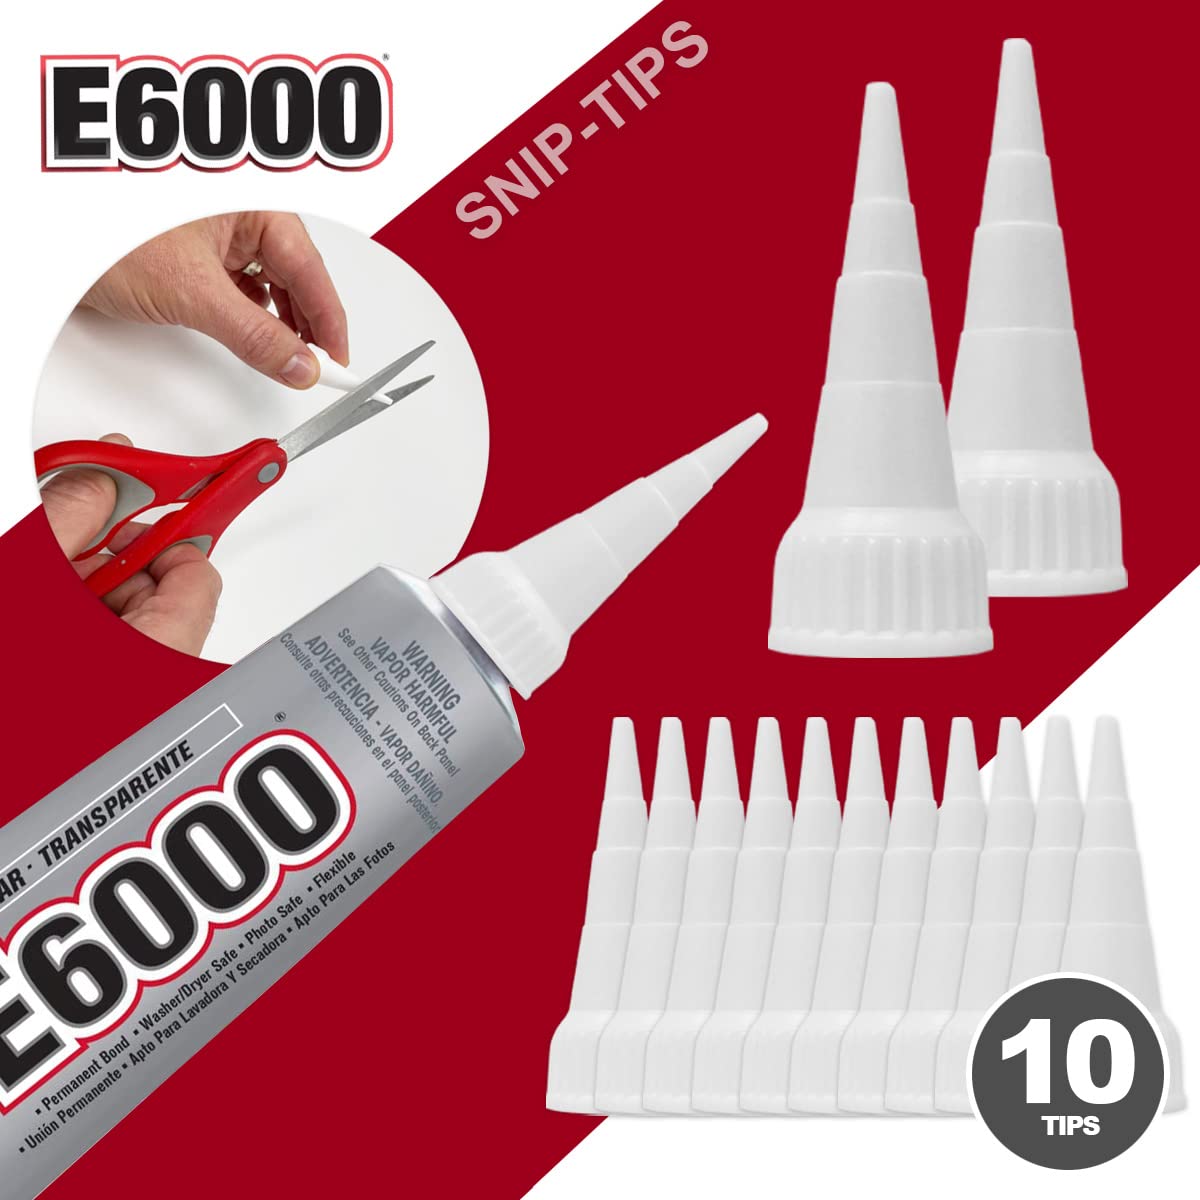 6 Pack: Elmer's® Glue-All® Extra Strong Multi-Purpose Liquid Glue